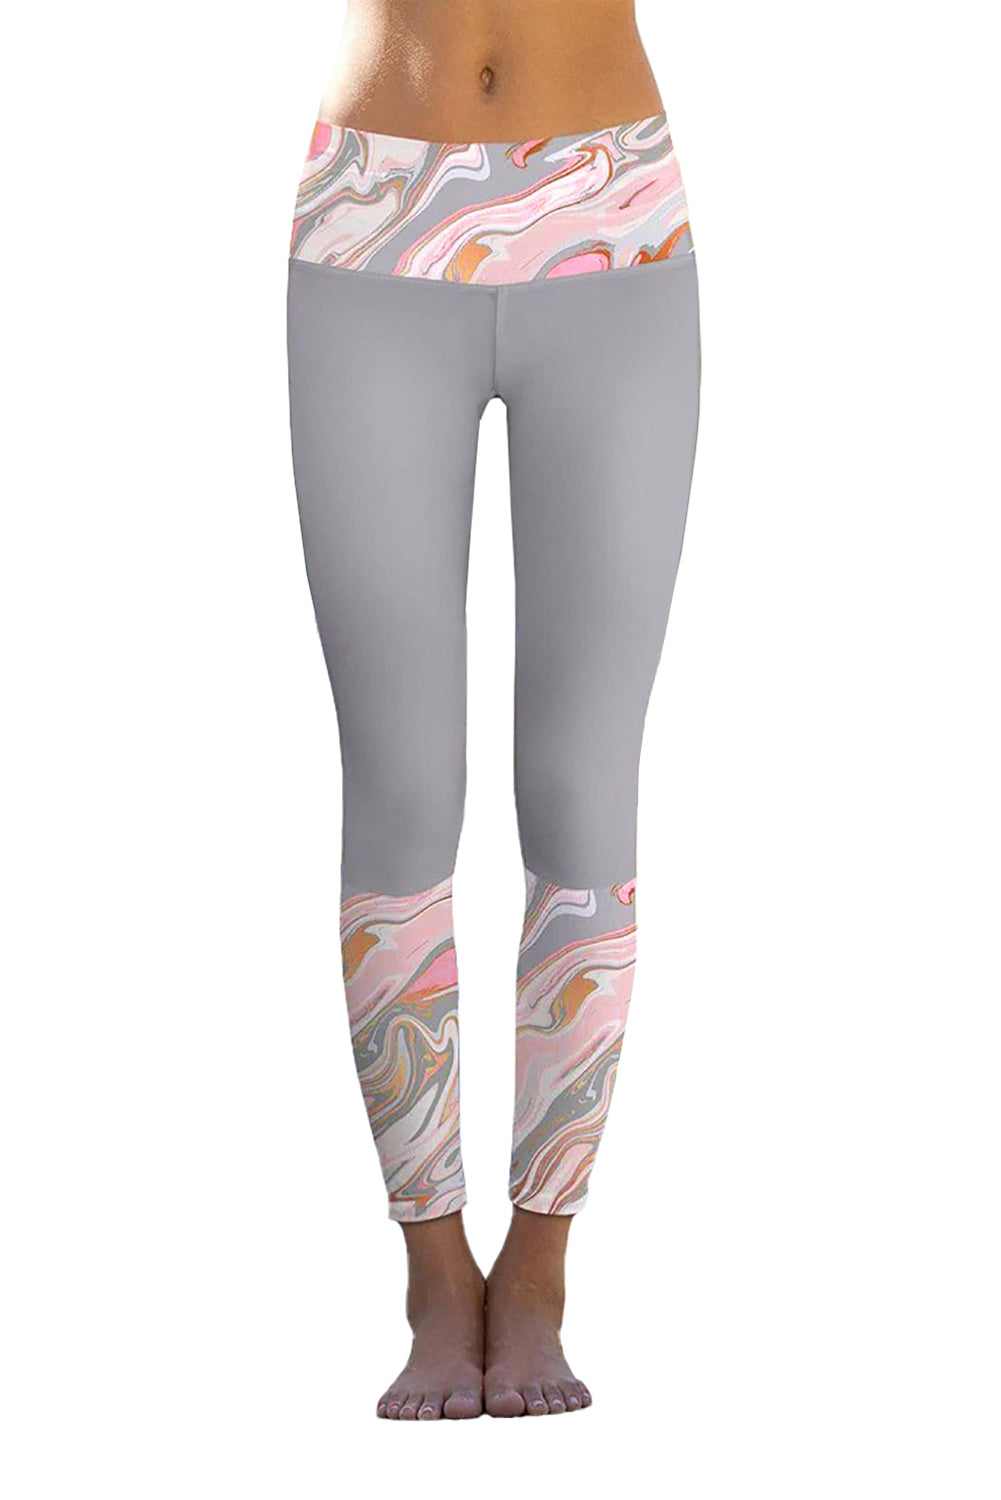 Gray Paisley Printed Details Leggings Yoga Pants - EBEPEX